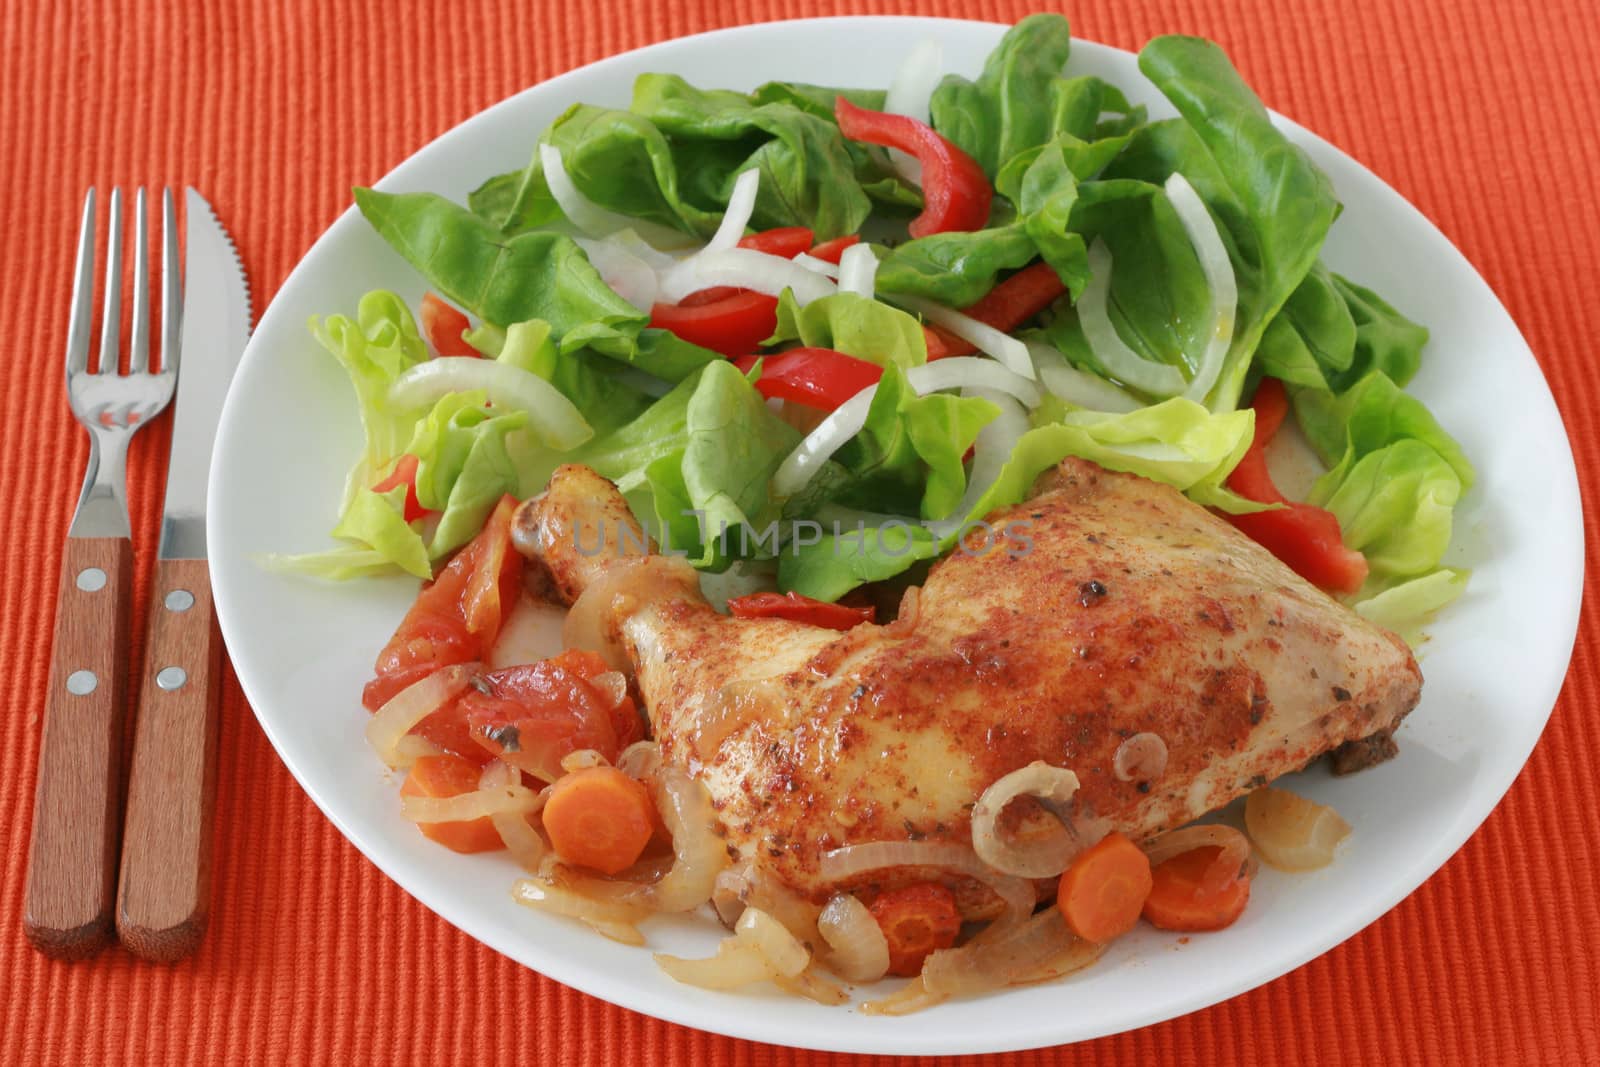 fried chicken with salad by nataliamylova